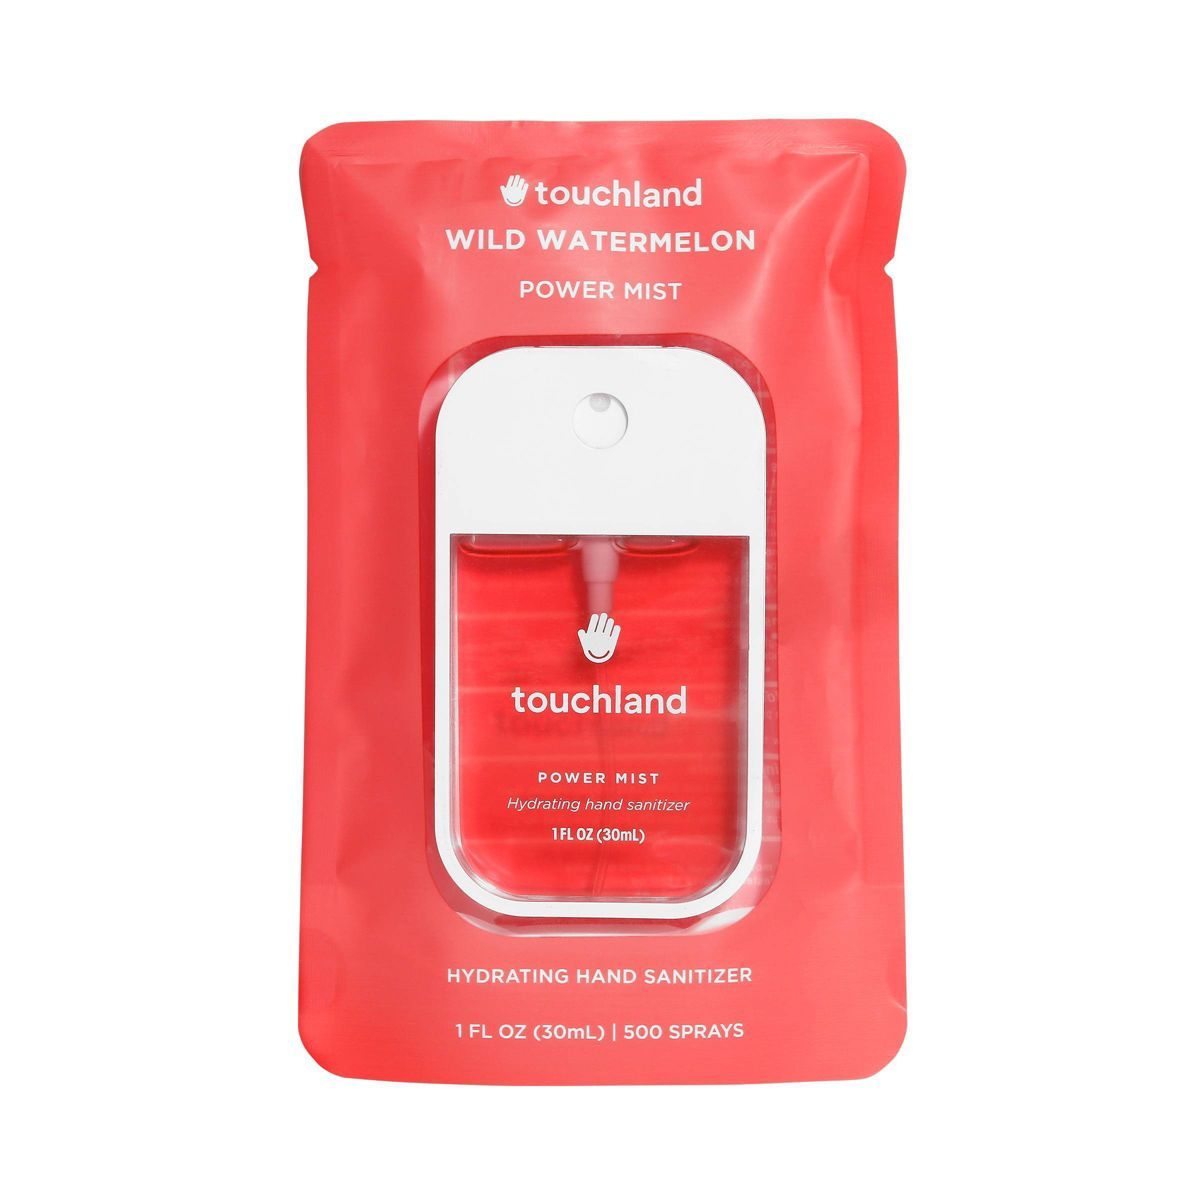 Touchland Power Mist Hydrating Hand Sanitizer - Wild Watermelon - Trial Size - 1 fl oz/500 sprays | Target